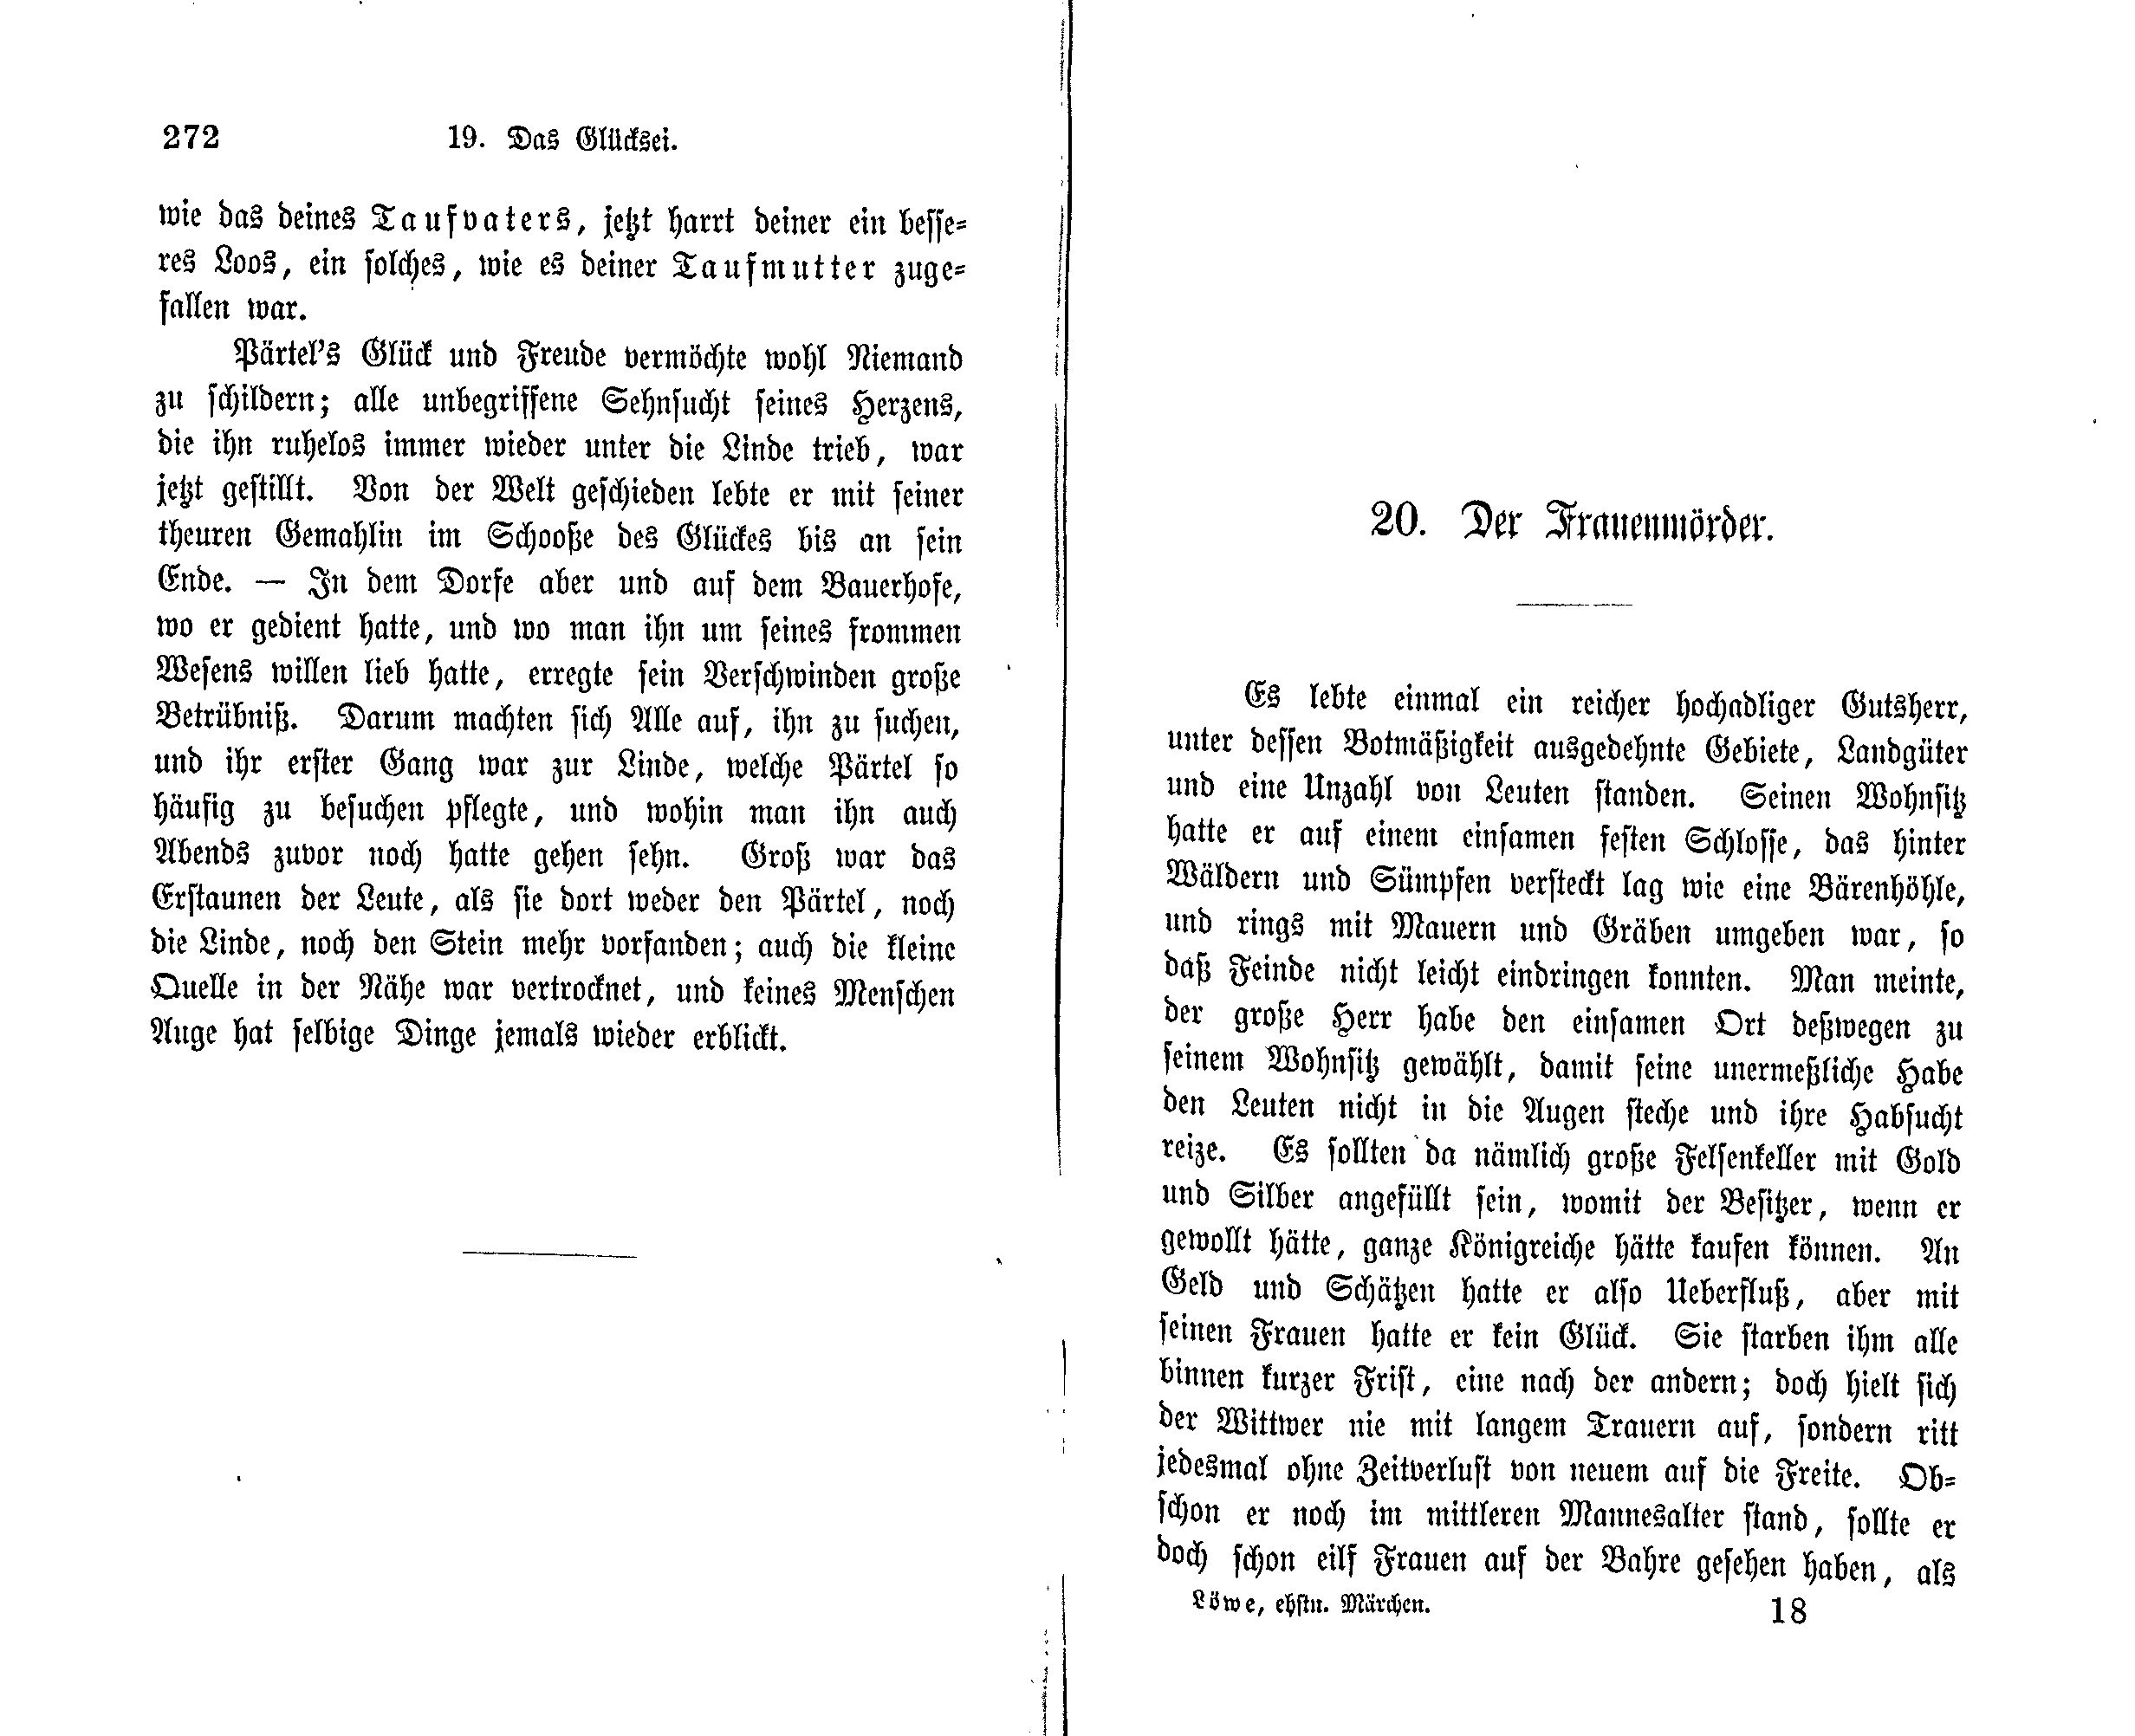 Der Frauenmörder (1869) | 1. (272-273) Main body of text